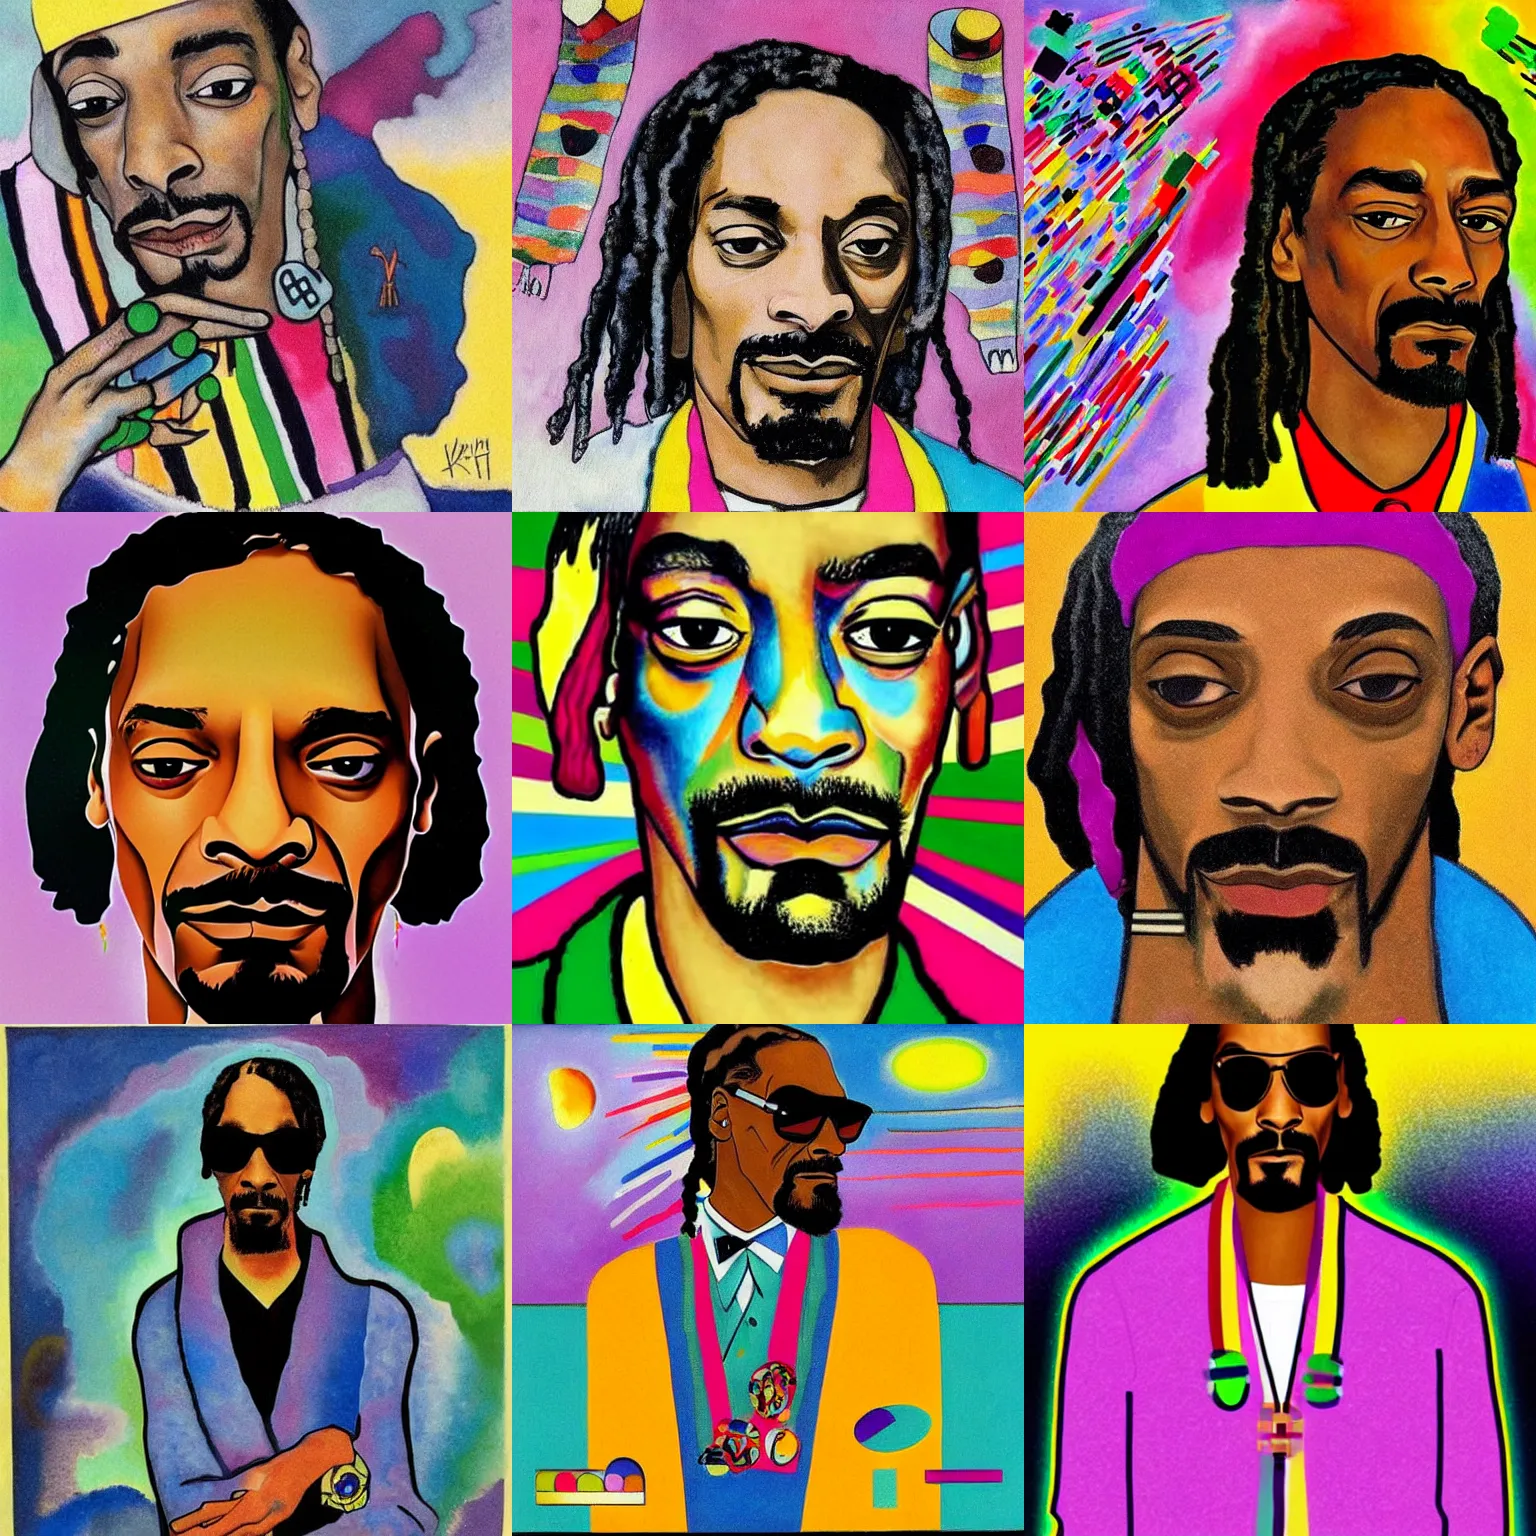 Prompt: Snoop Dogg, by Kandinsky